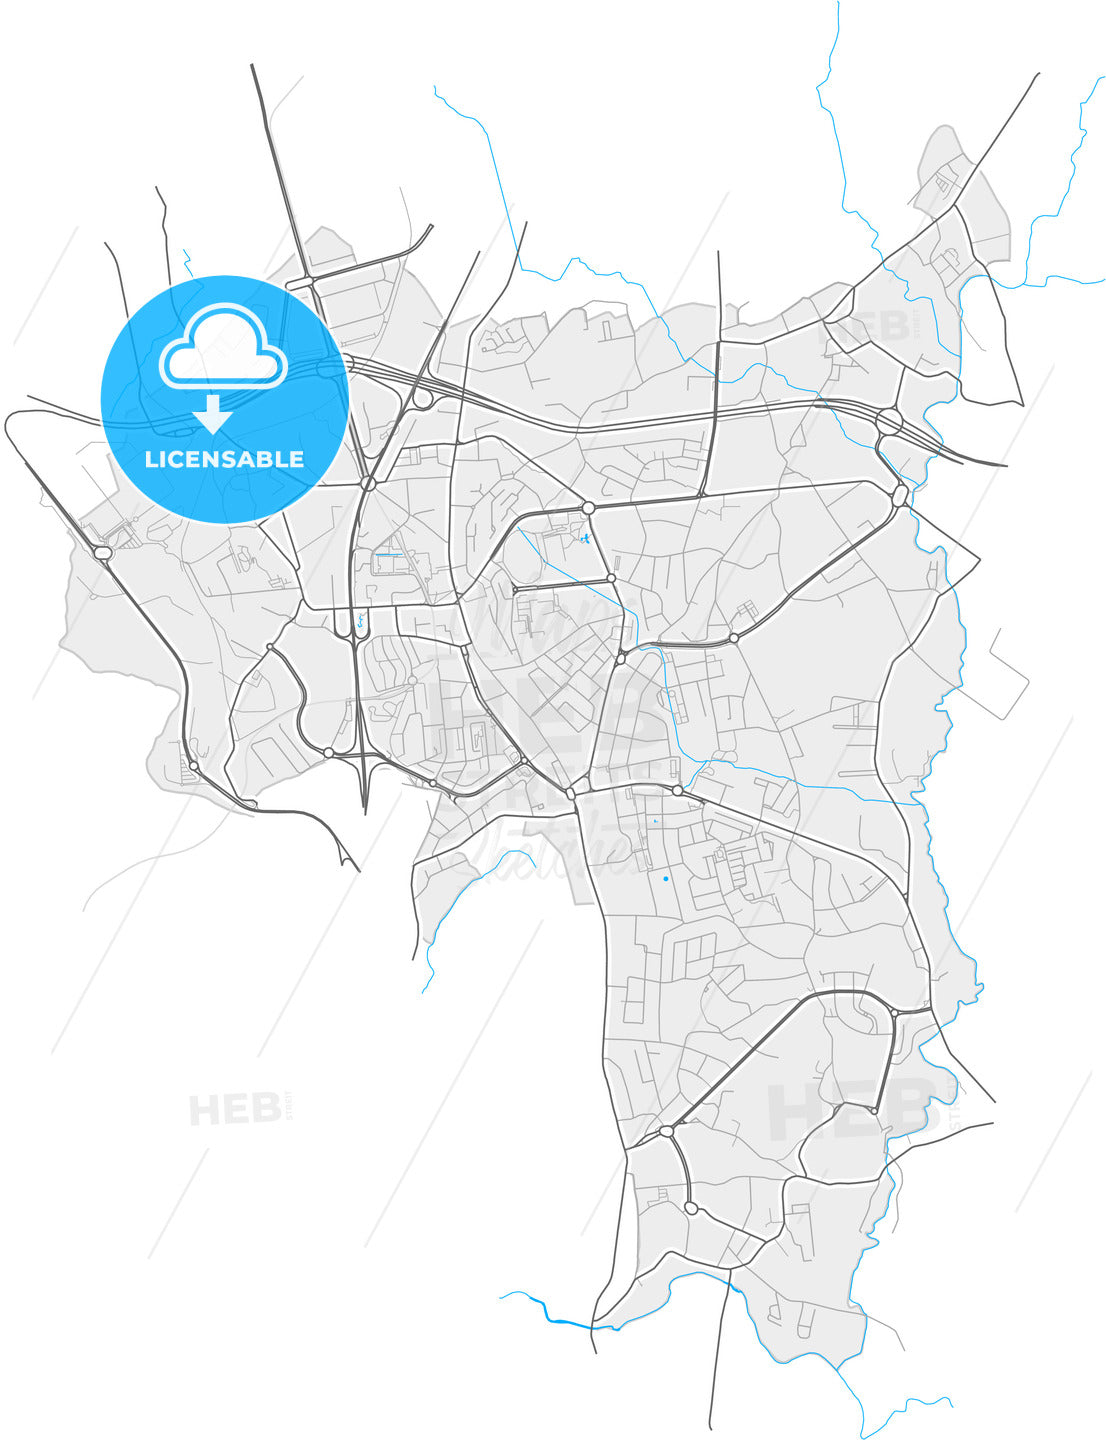 Maia, Porto, Portugal, high quality vector map